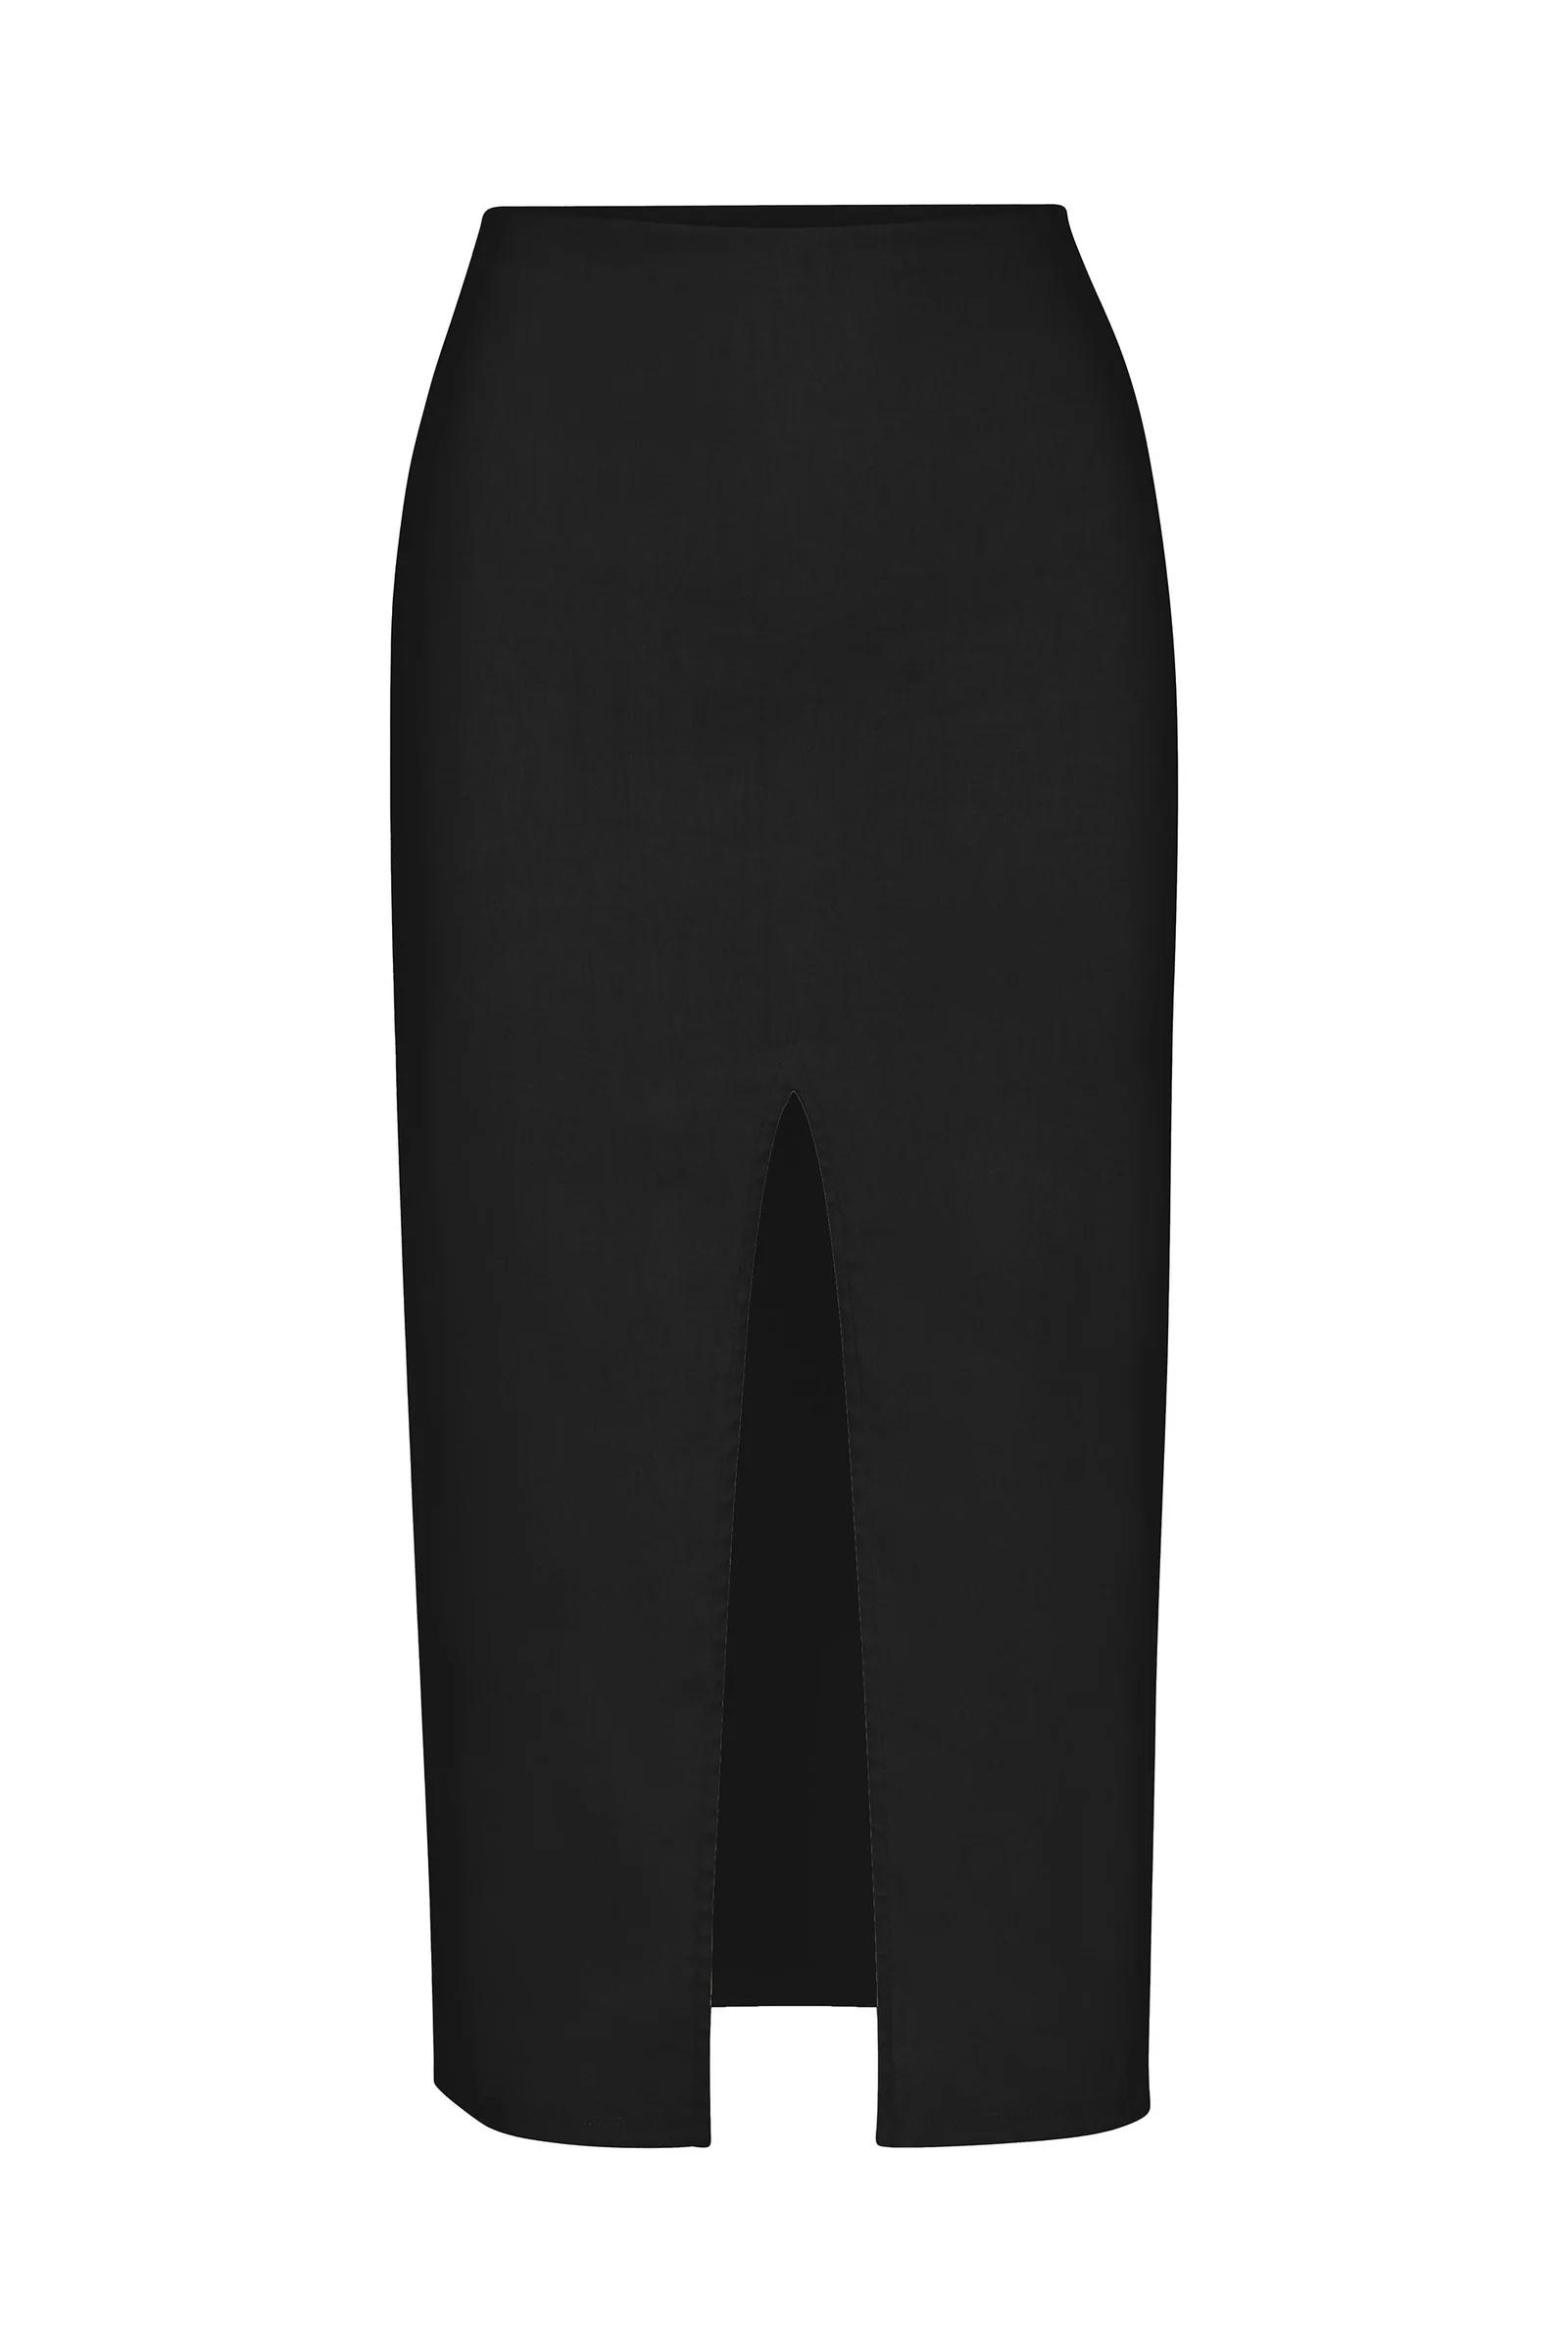 Product Image for The Front Slit Midi Skirt, Black